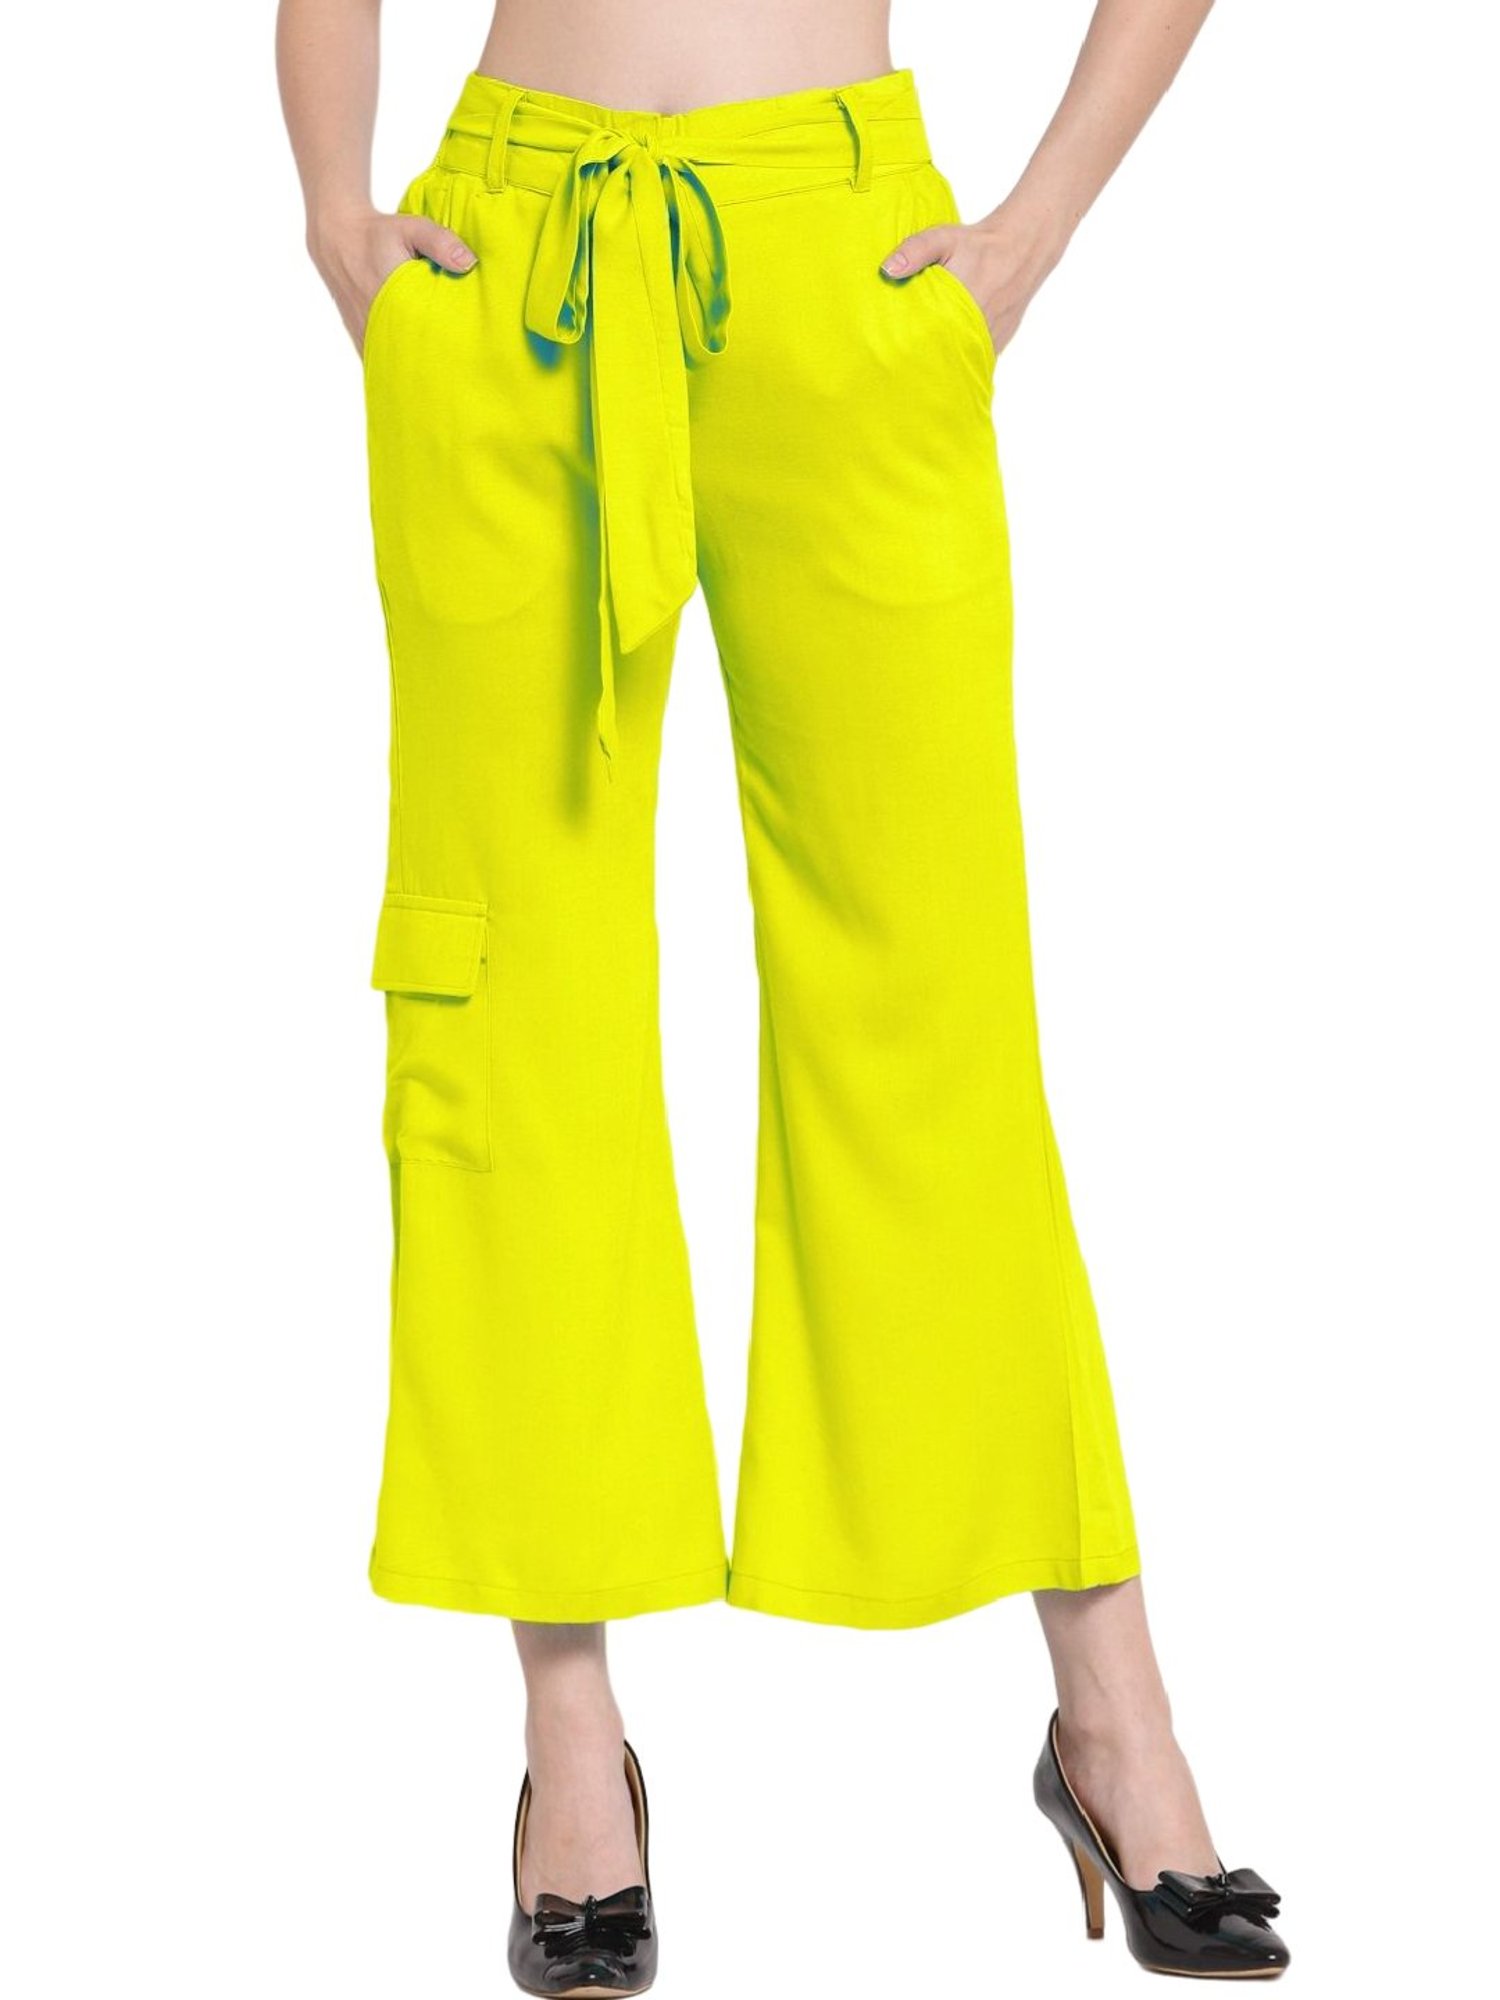 Womens Cargo Pants Yellow Bolf HM003 YELLOW